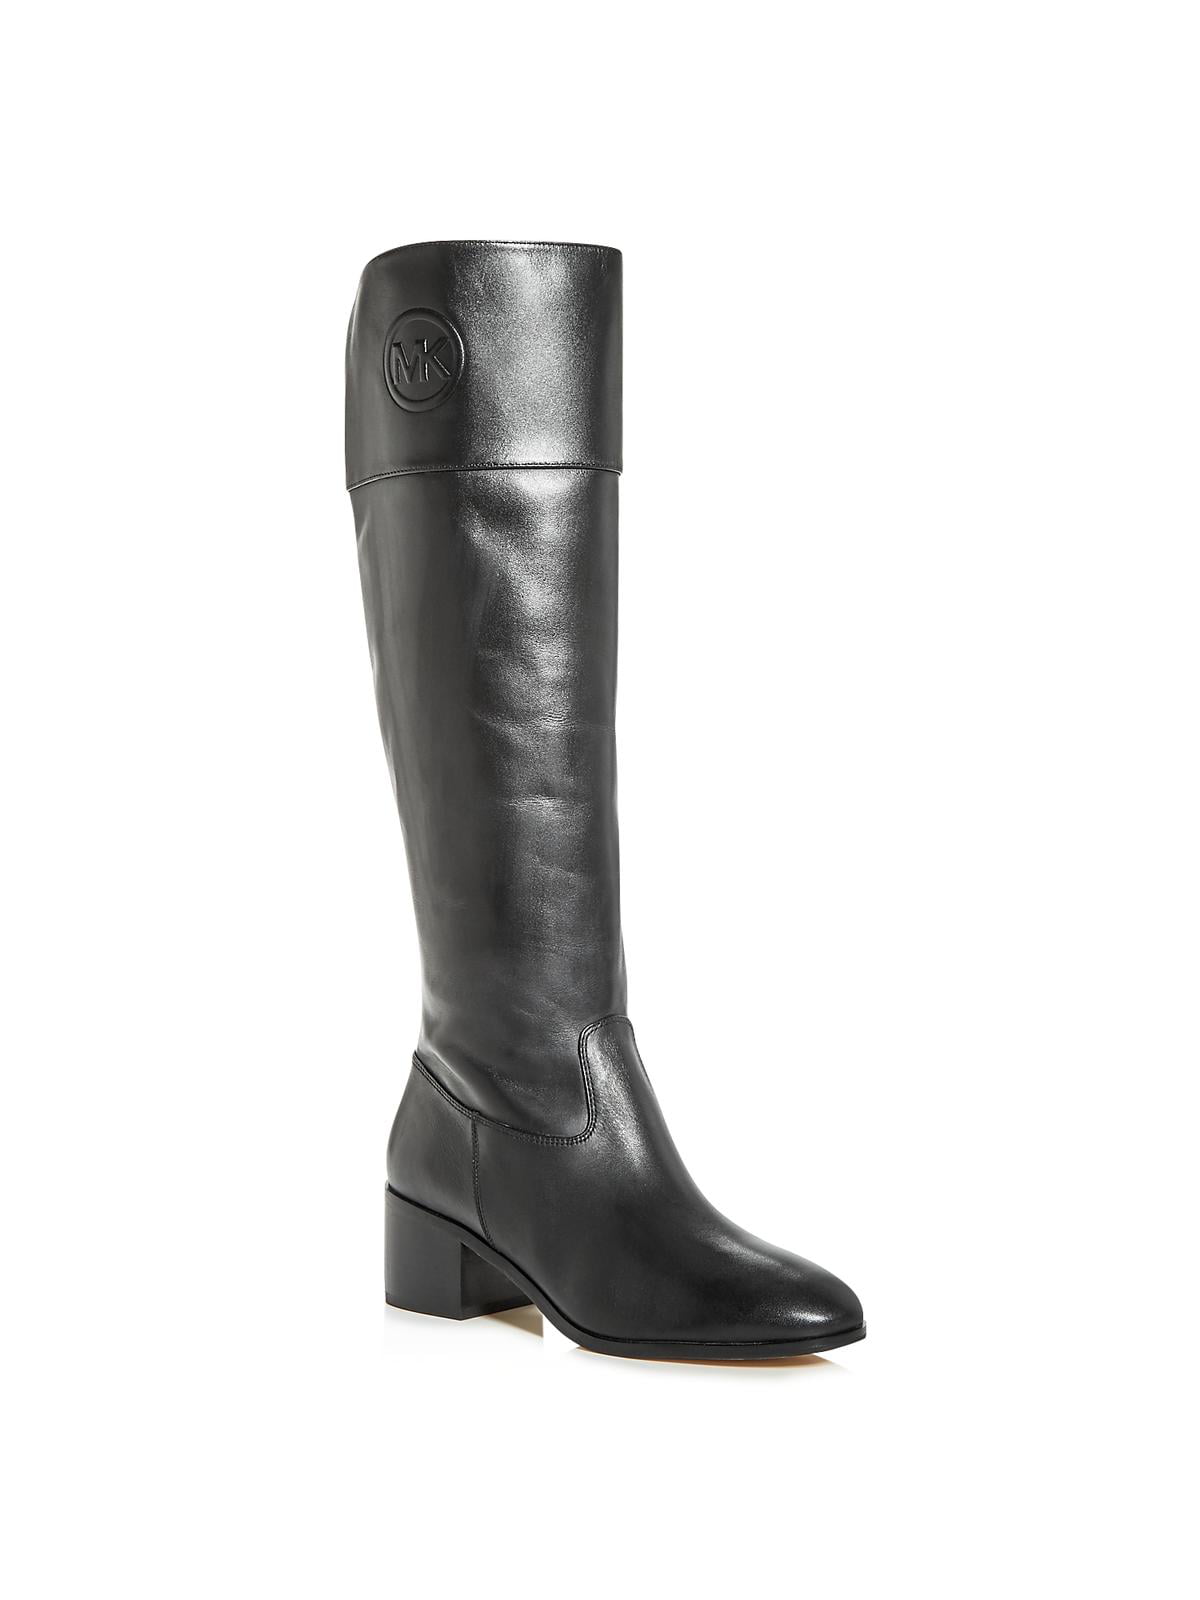 MICHAEL Michael Kors Womens Dylyn Leather Riding Boots Black 7 Medium (B,M)  